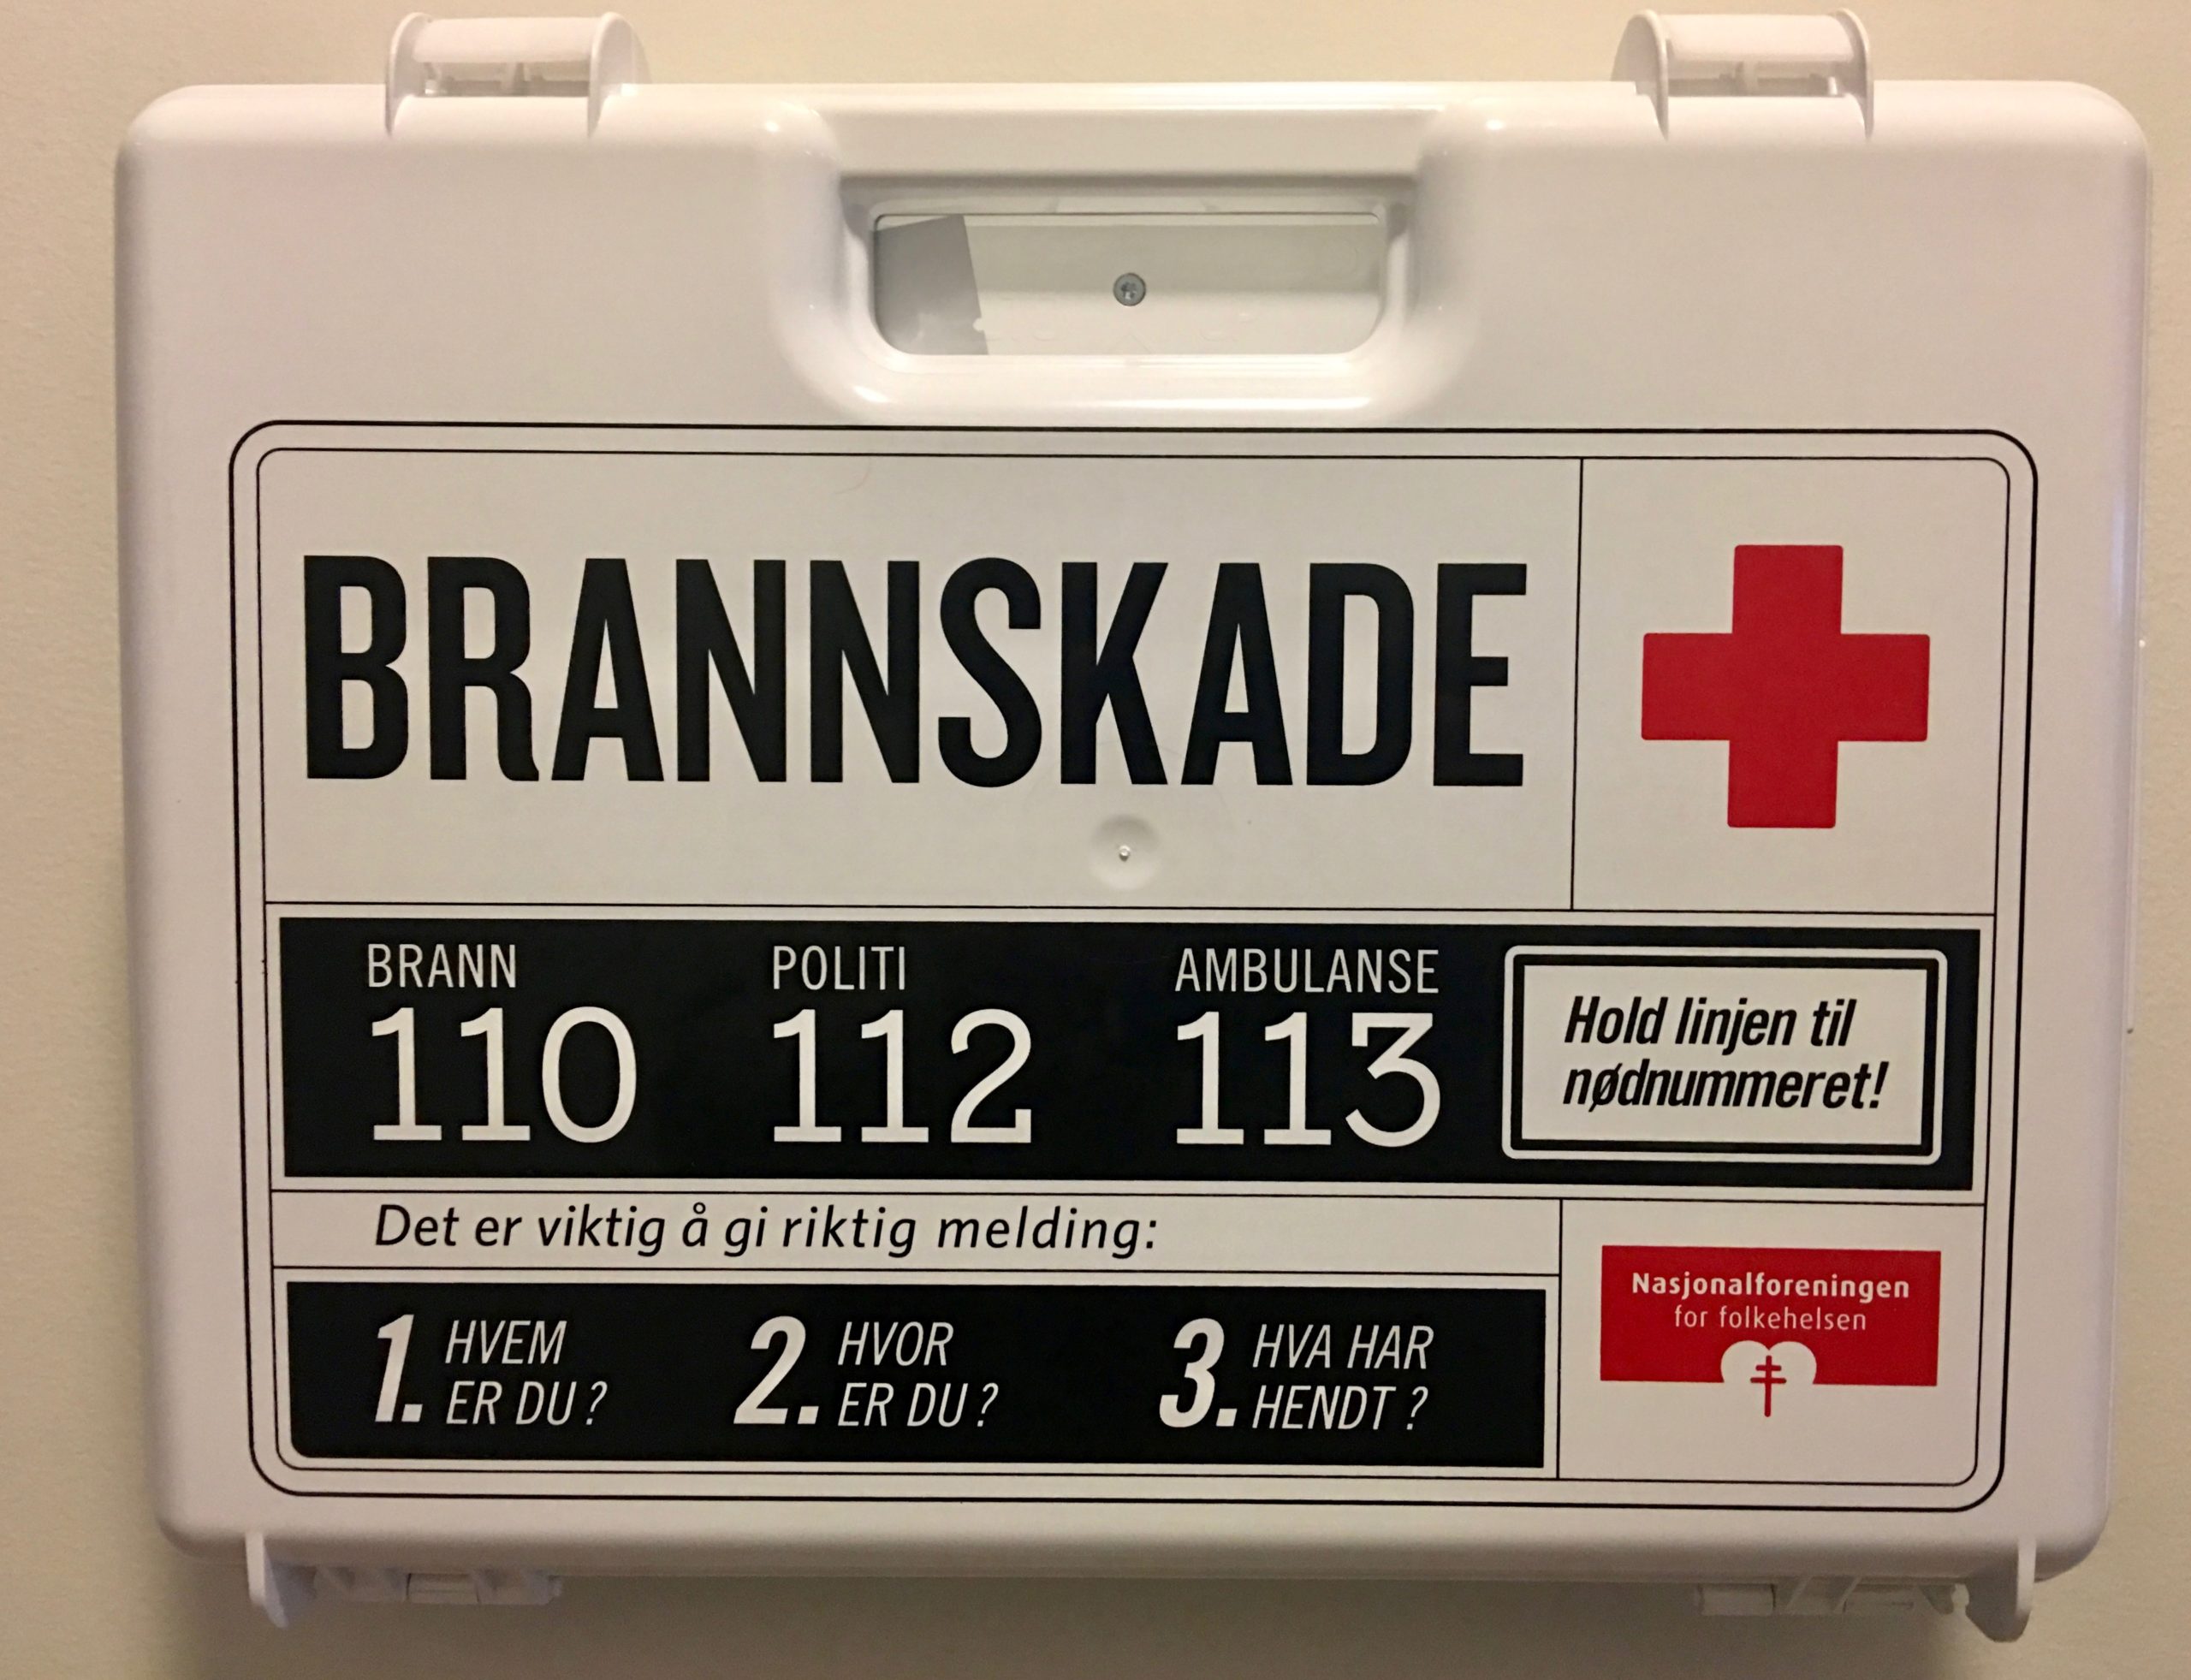 Best first aid kits